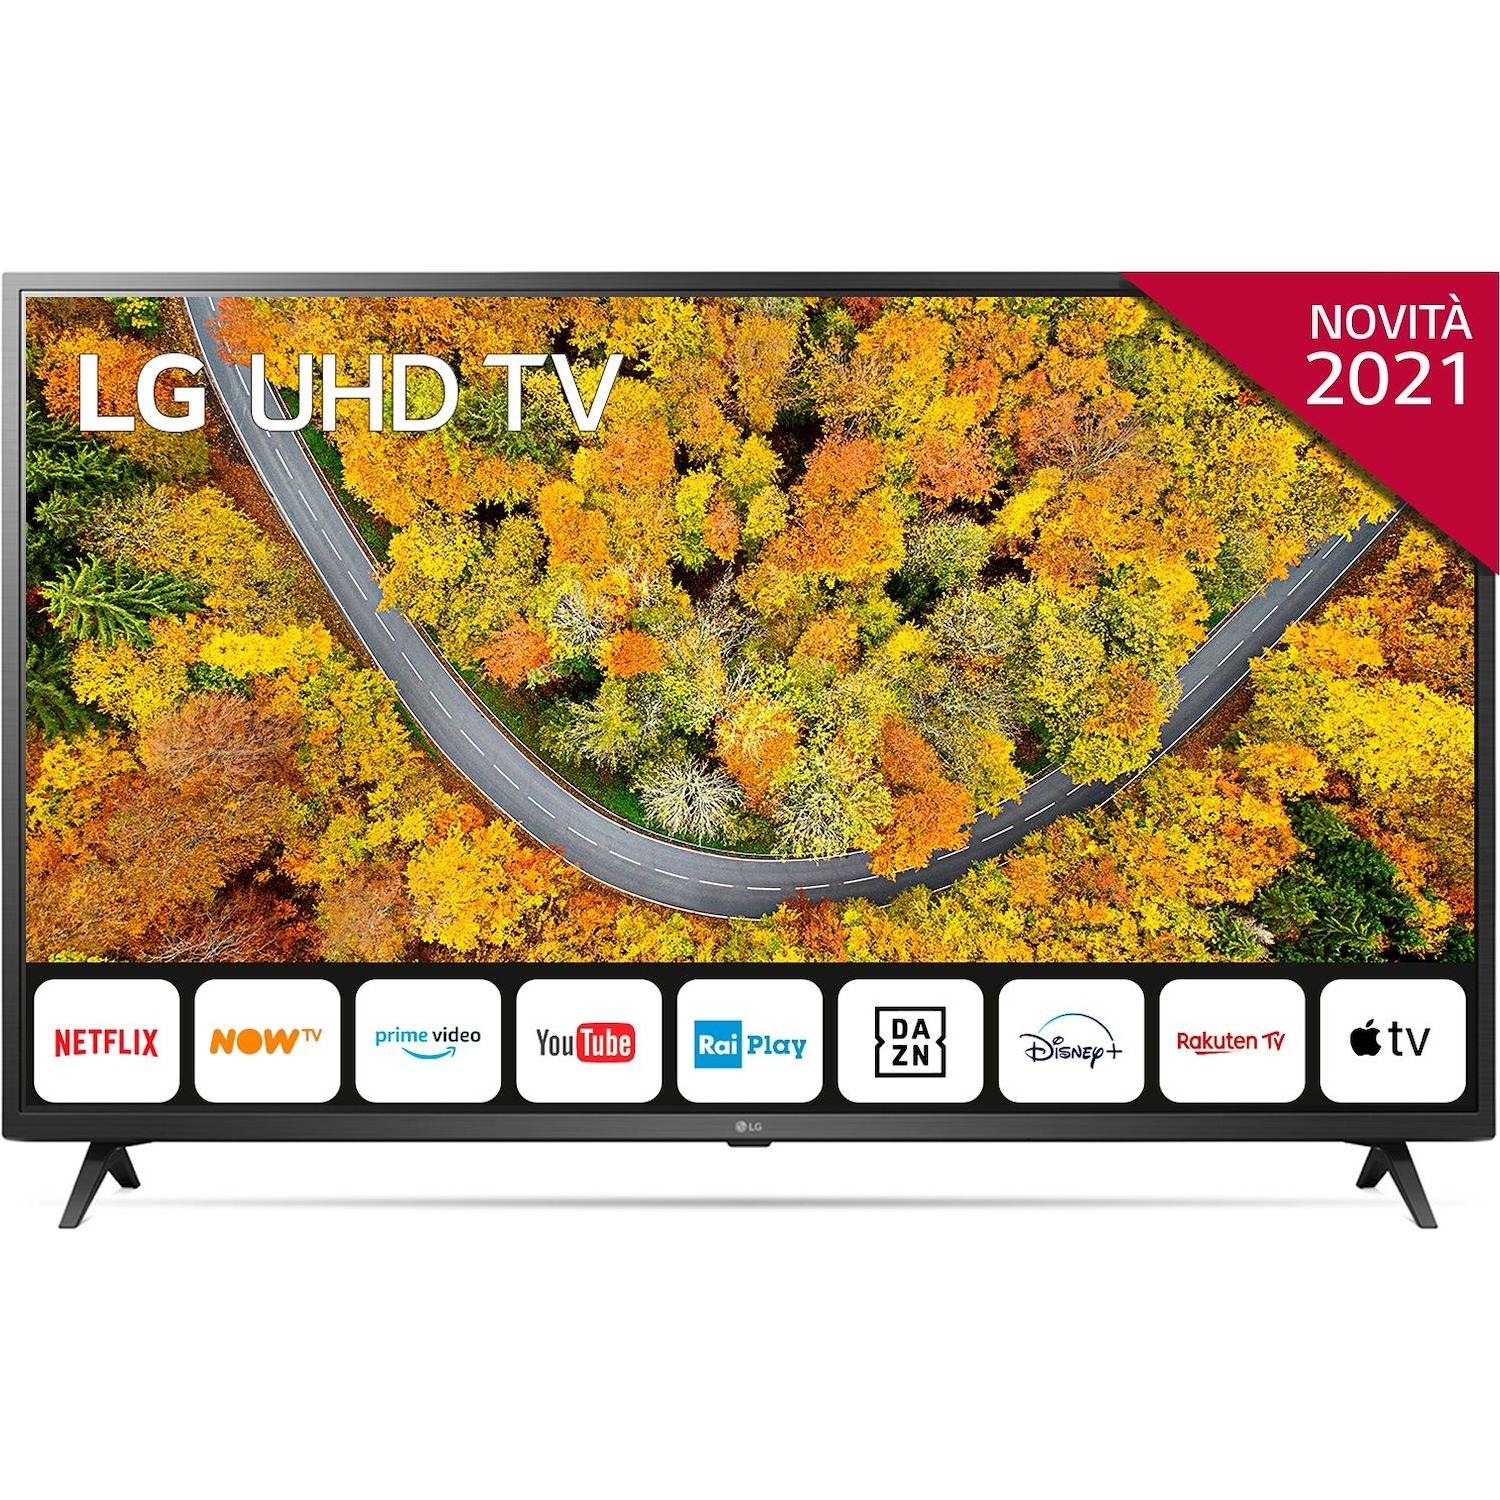 Immagine per TV LED Smart 4K UHD LG 65UP75006 da DIMOStore